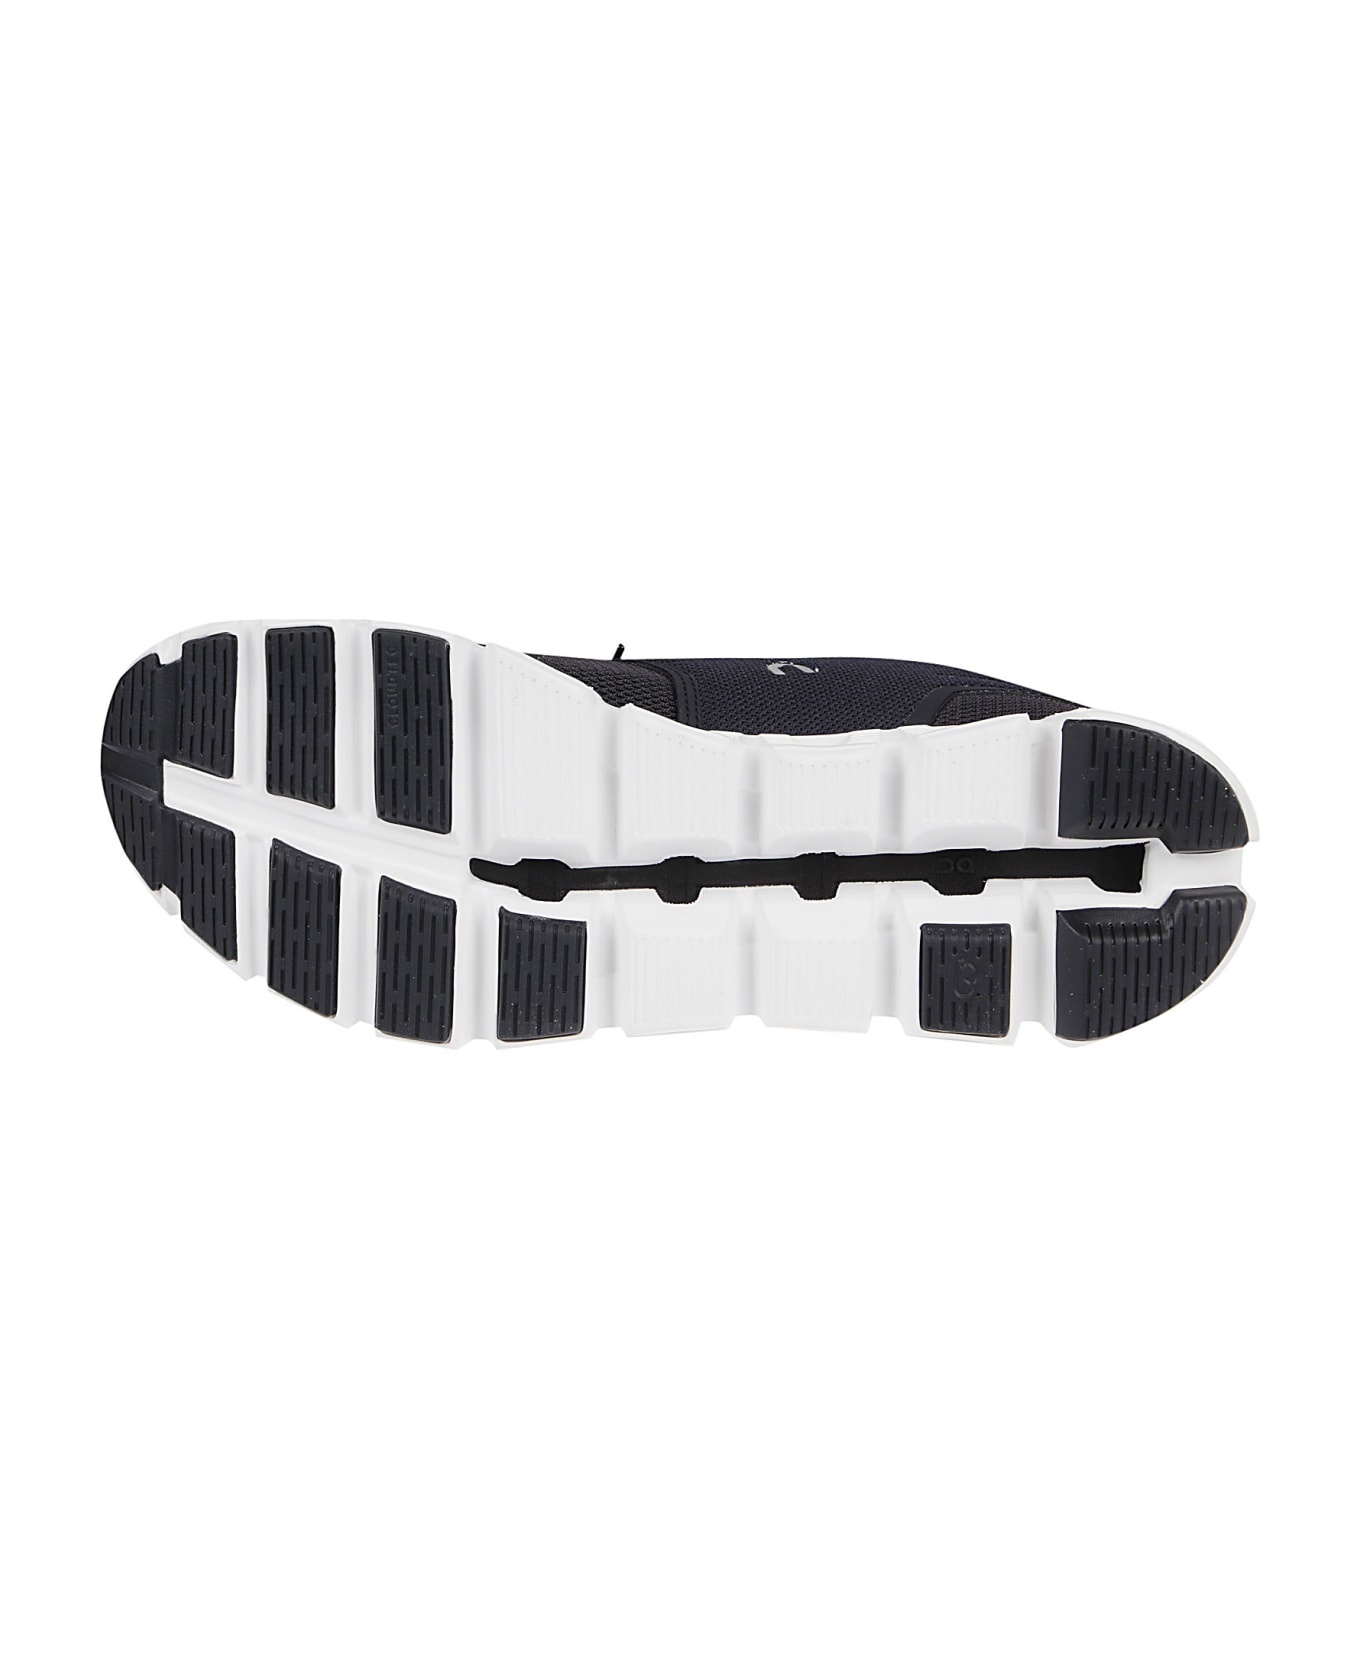 ON Cloud 5 Sneakers - Black/white スニーカー